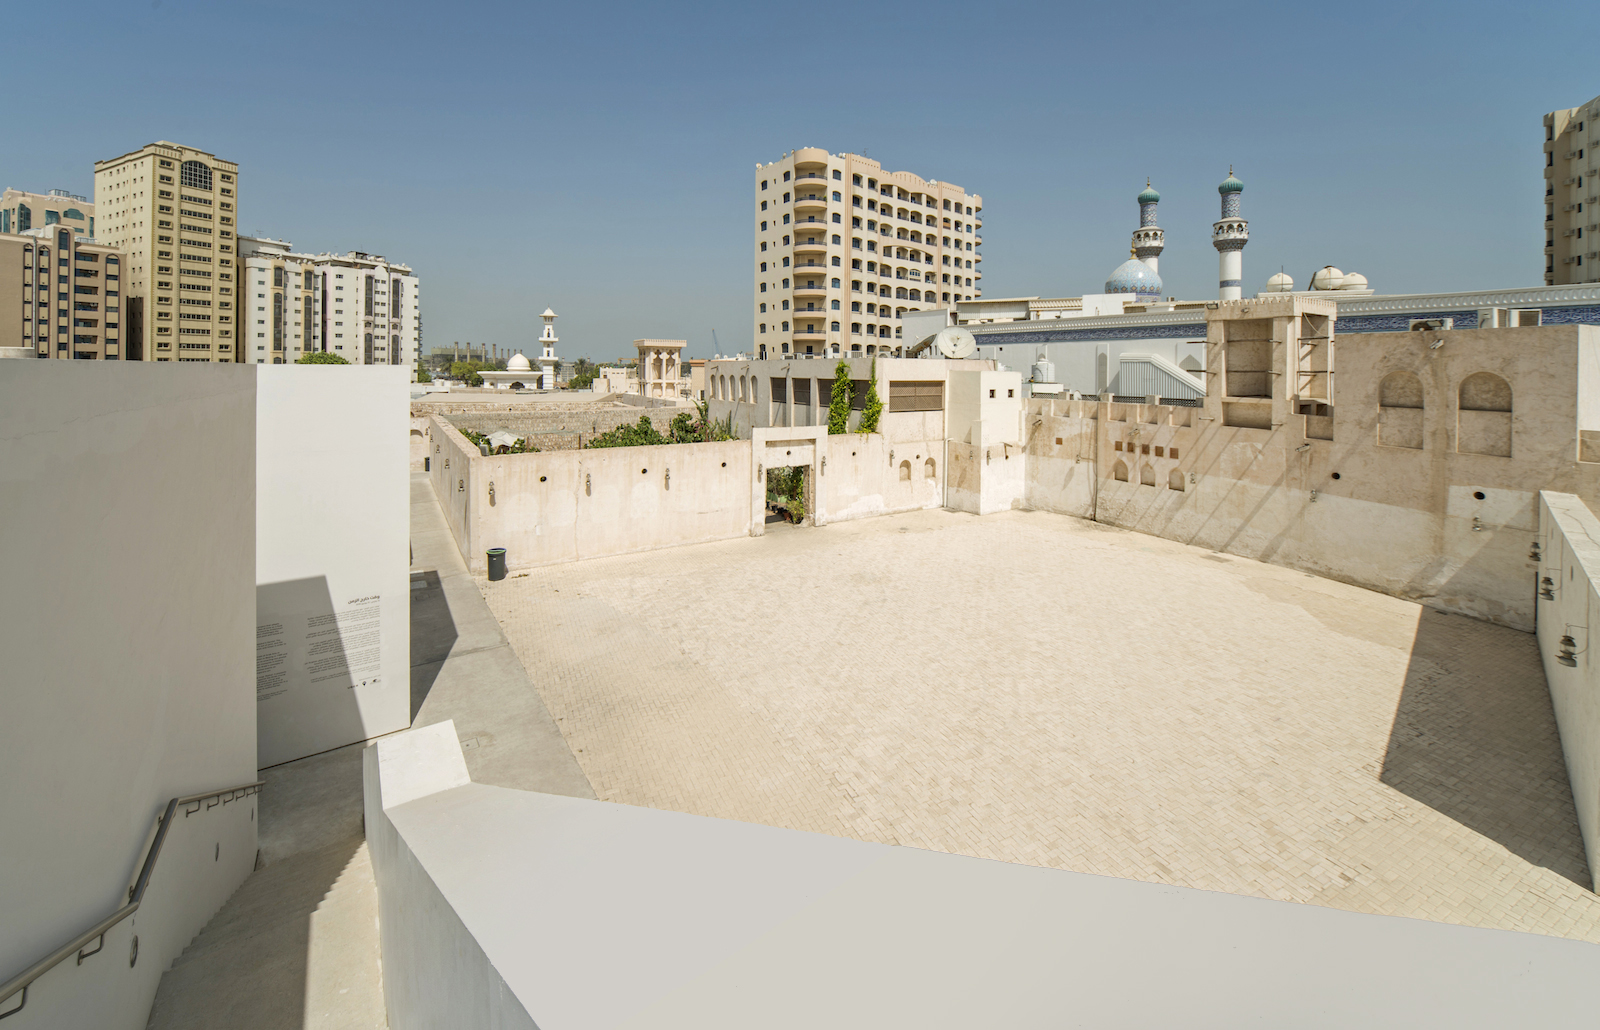 Al Hamdan Bin Mousa Courtyard Image